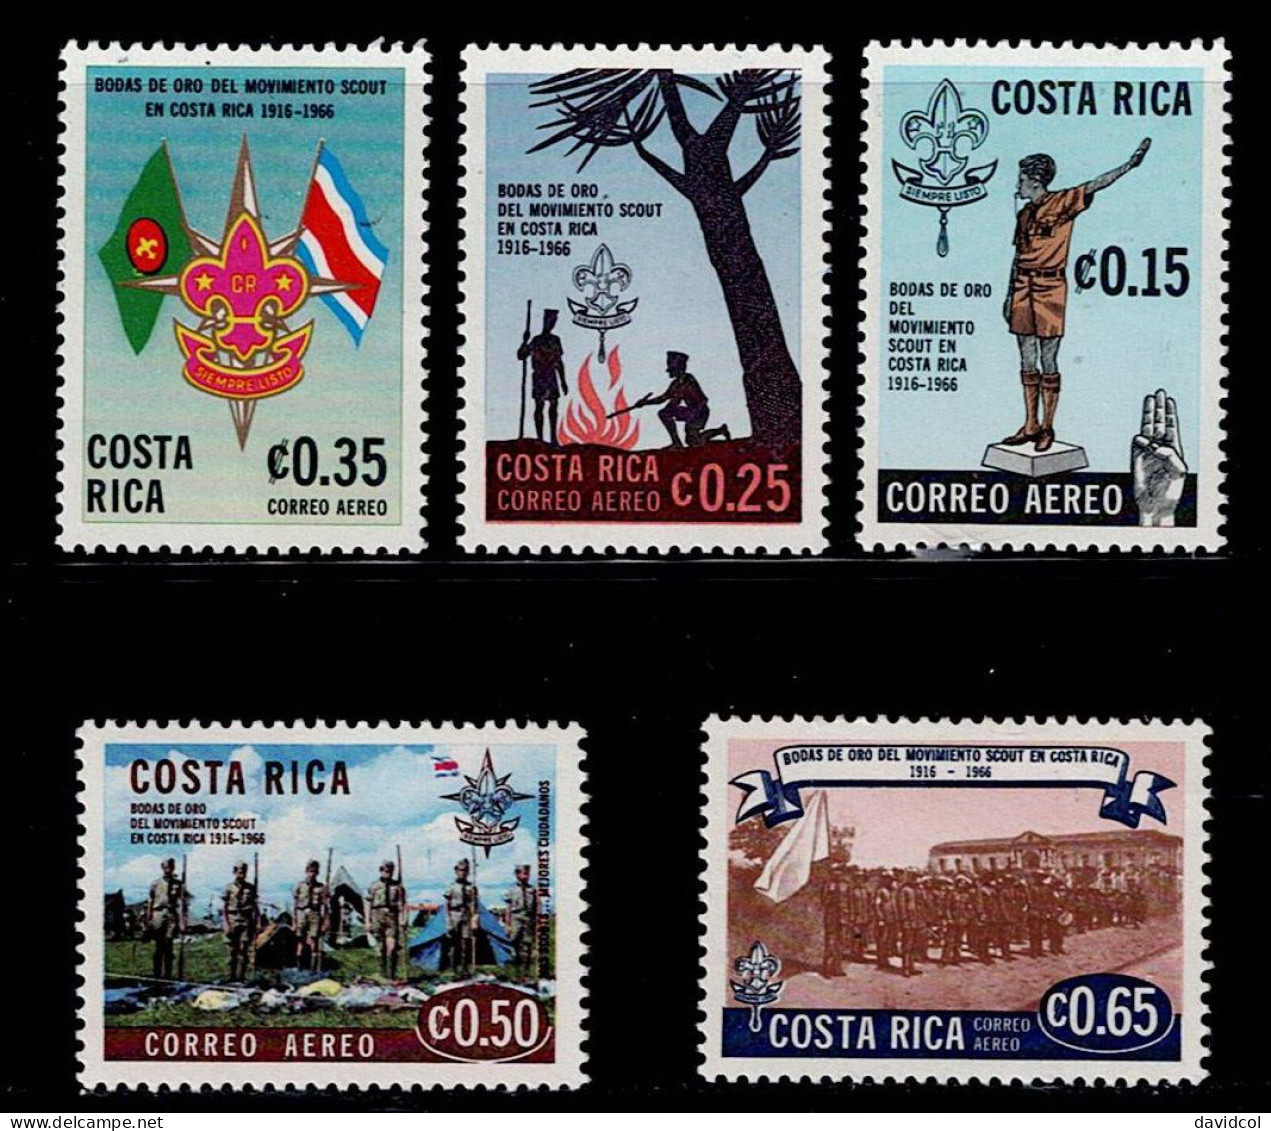 CRC-01- COSTA RICA - 1966 - MNH -SCOUTS- 50TH ANNIVERSARY OF COSTA RICA SCOUTS - Costa Rica